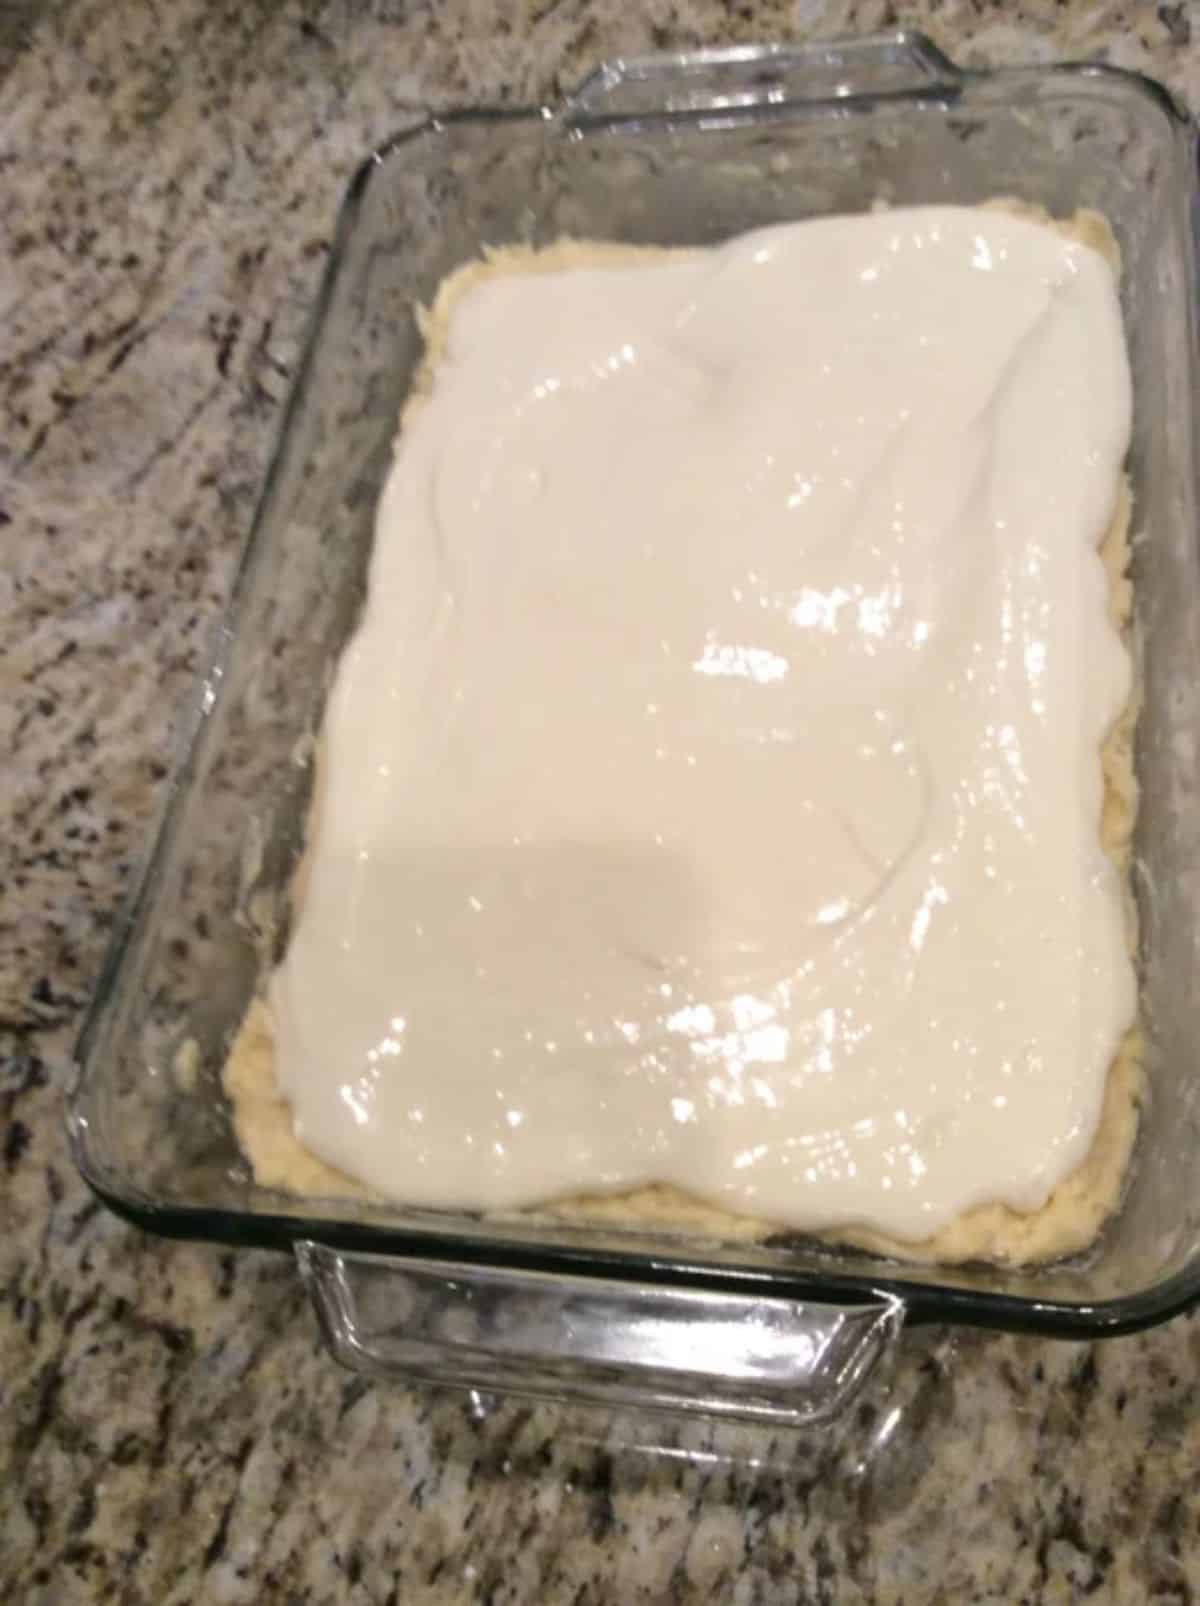 Creamy ugly cake in a glass casserole.